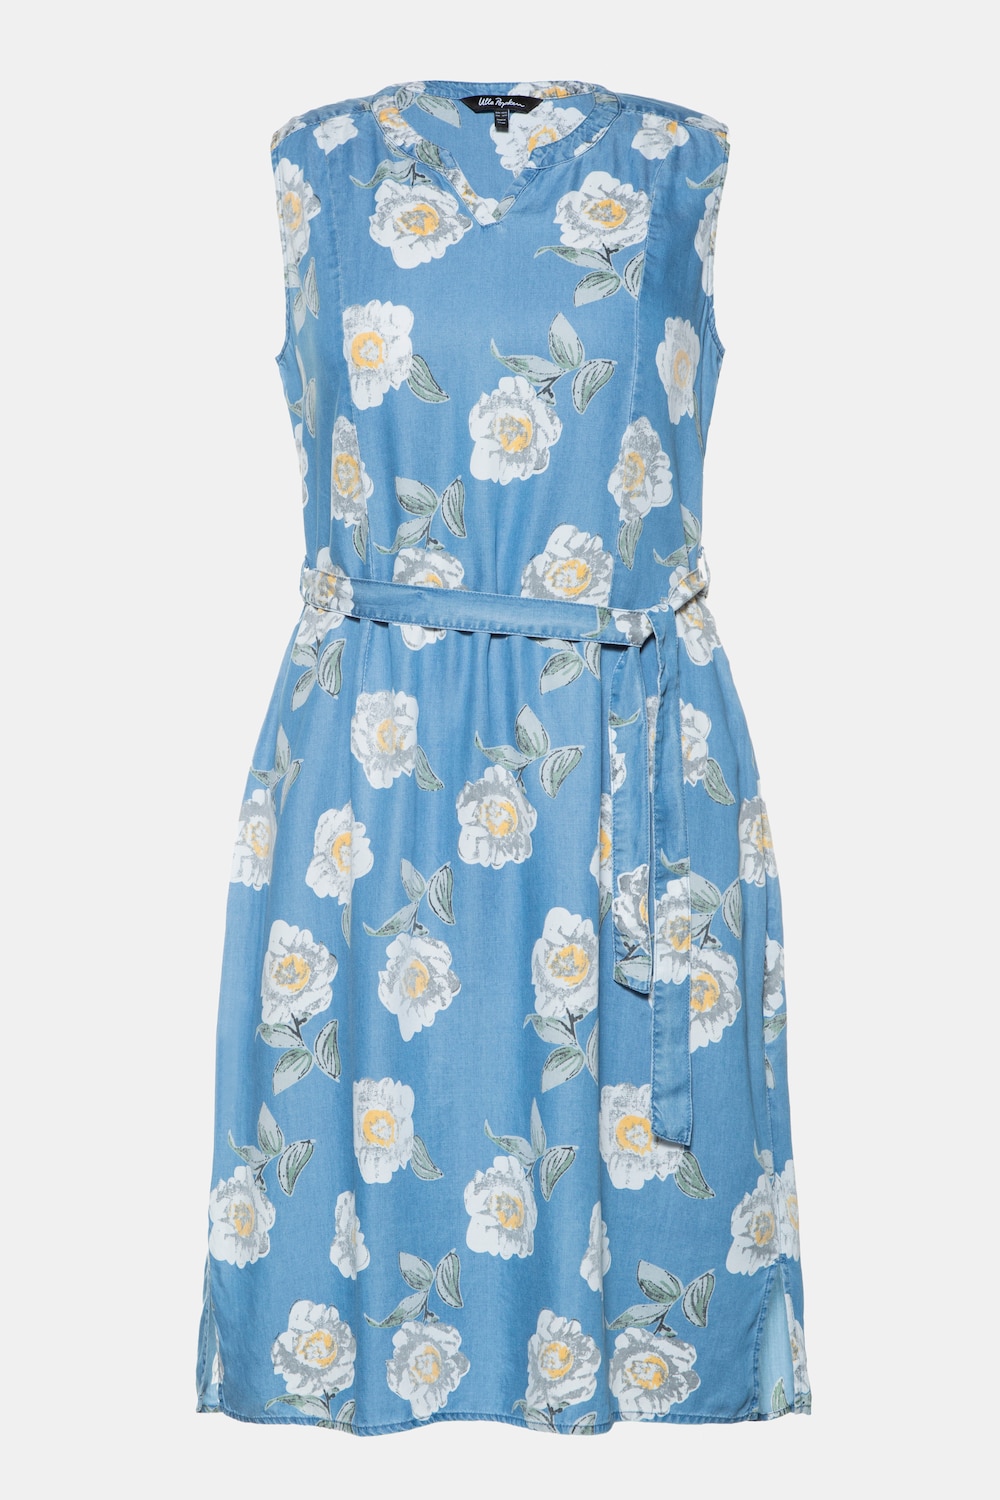 Plus Size Vintage Floral Print Belted Lyocell Tank Dress, Woman, blue, size: 28/30, synthetic fibers, Ulla Popken